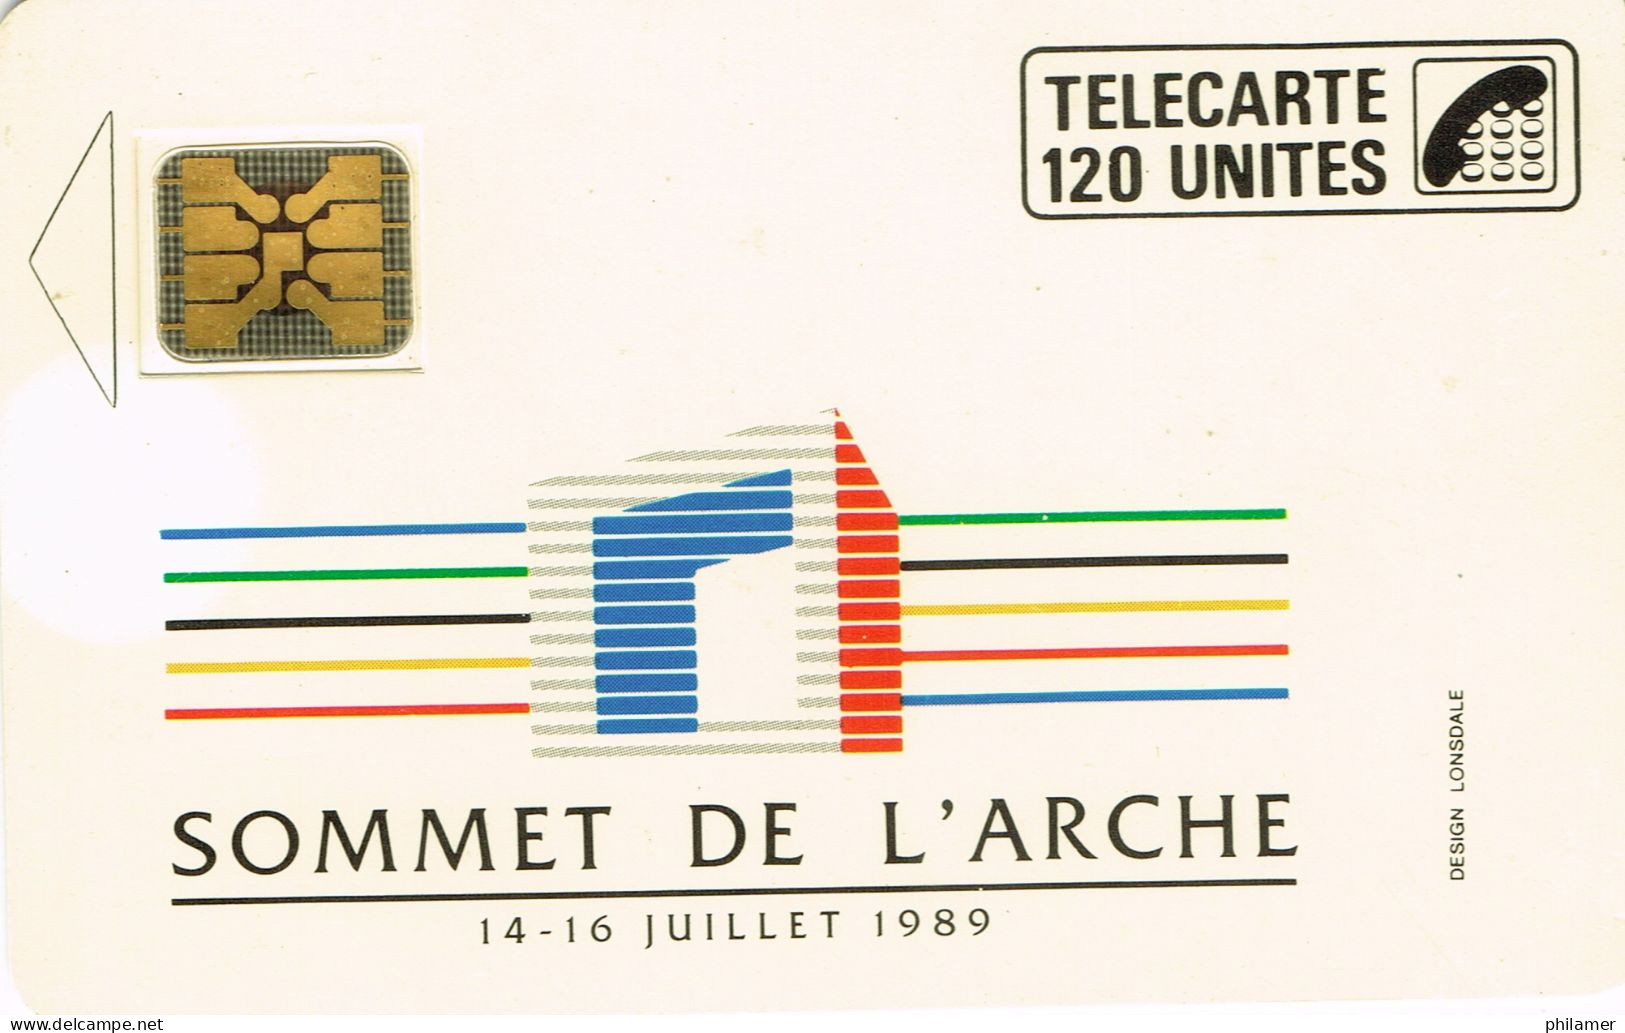 France French Telecarte Phonecard Interne C42 Sommet De L'arche 1989 France Telecom Paris UT BE - Internas